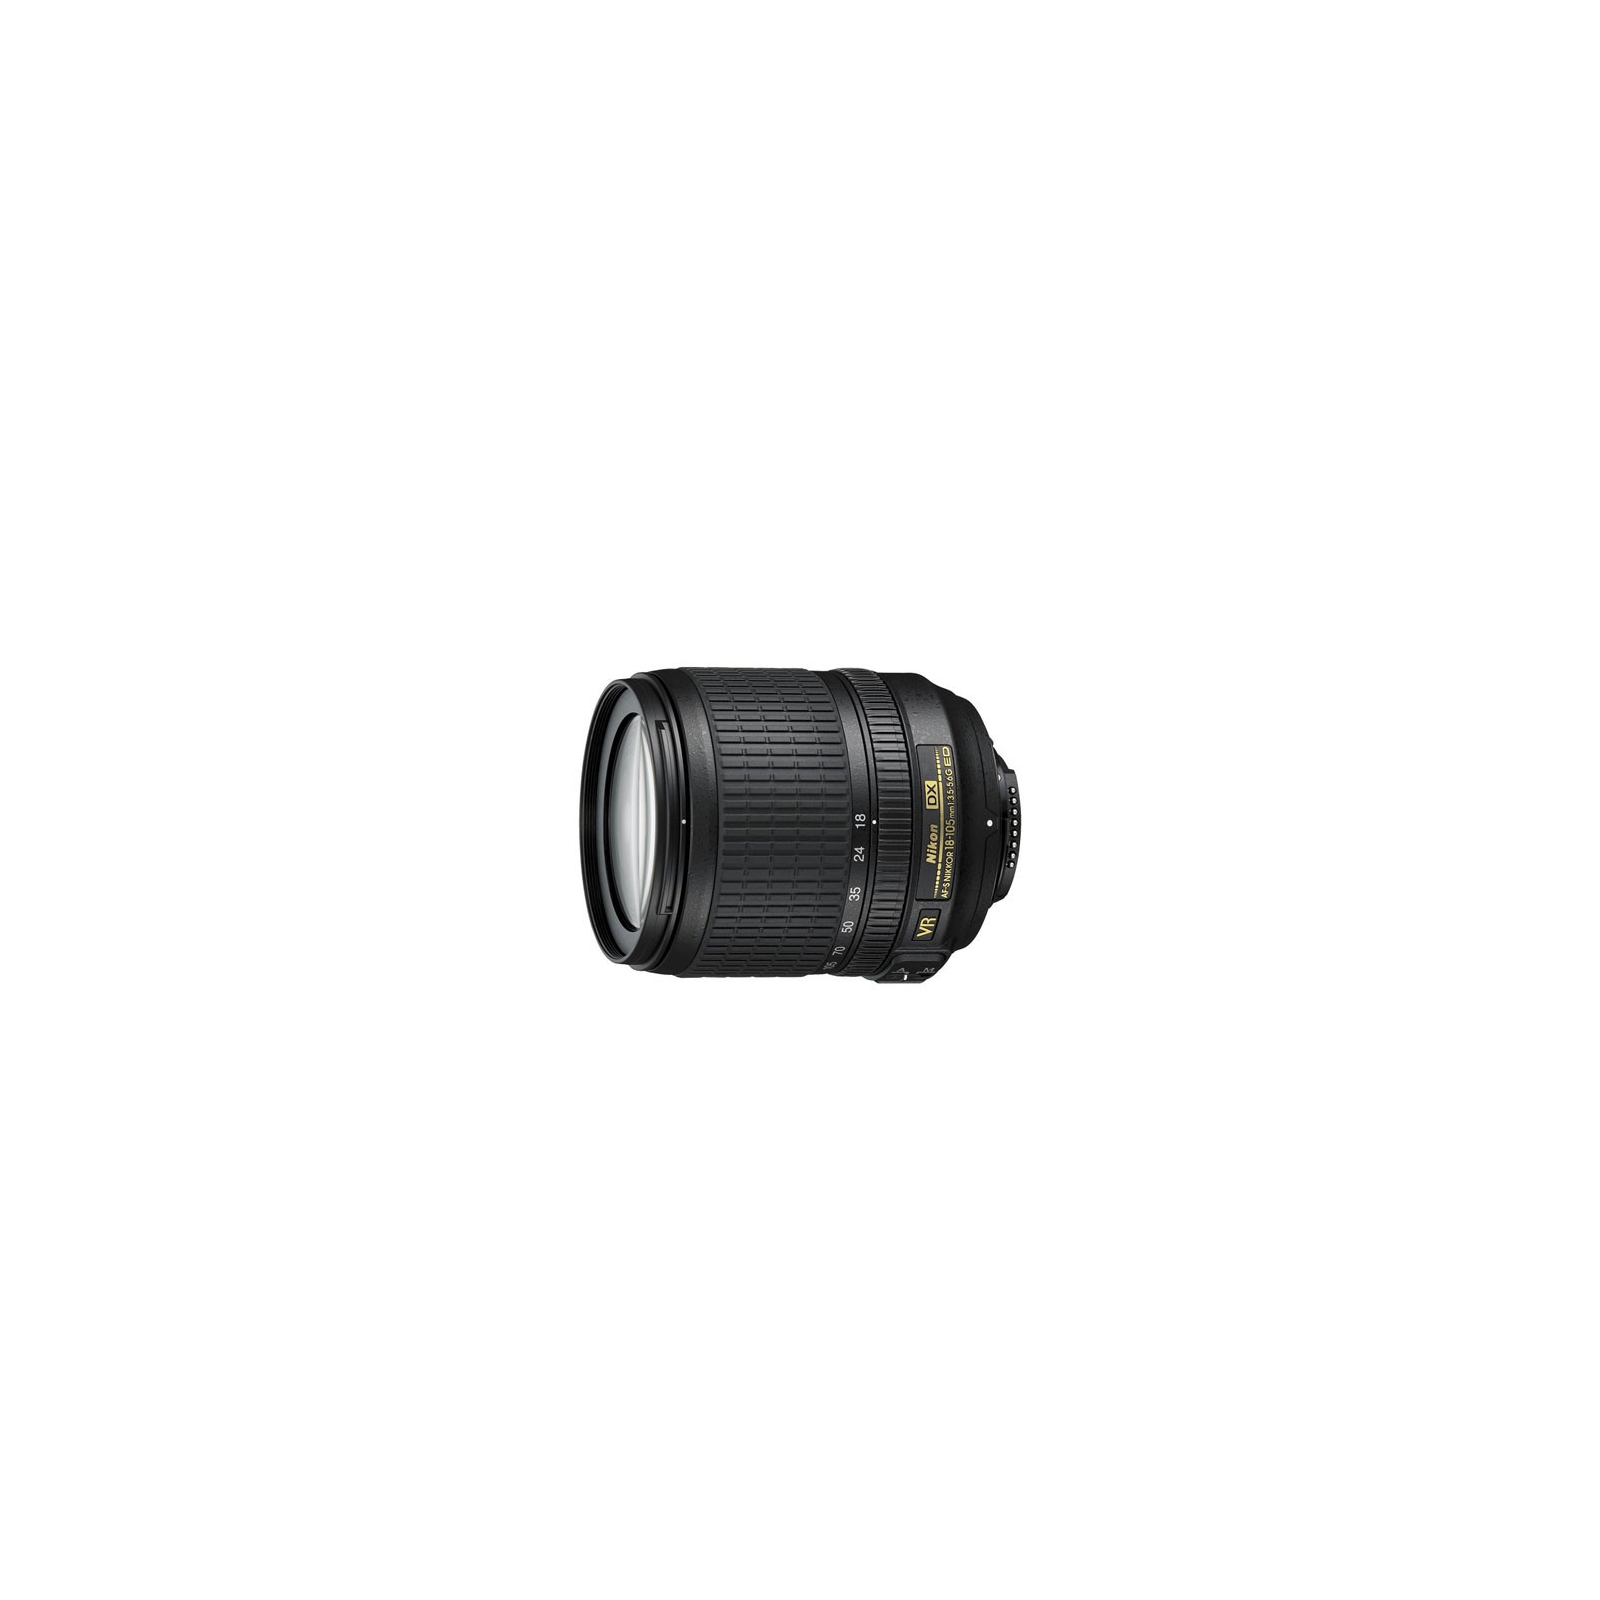 Об'єктив Nikon AF-S 18-105mm f/3.5-5.6G ED VR DX (JAA805DA/JAA805DB)